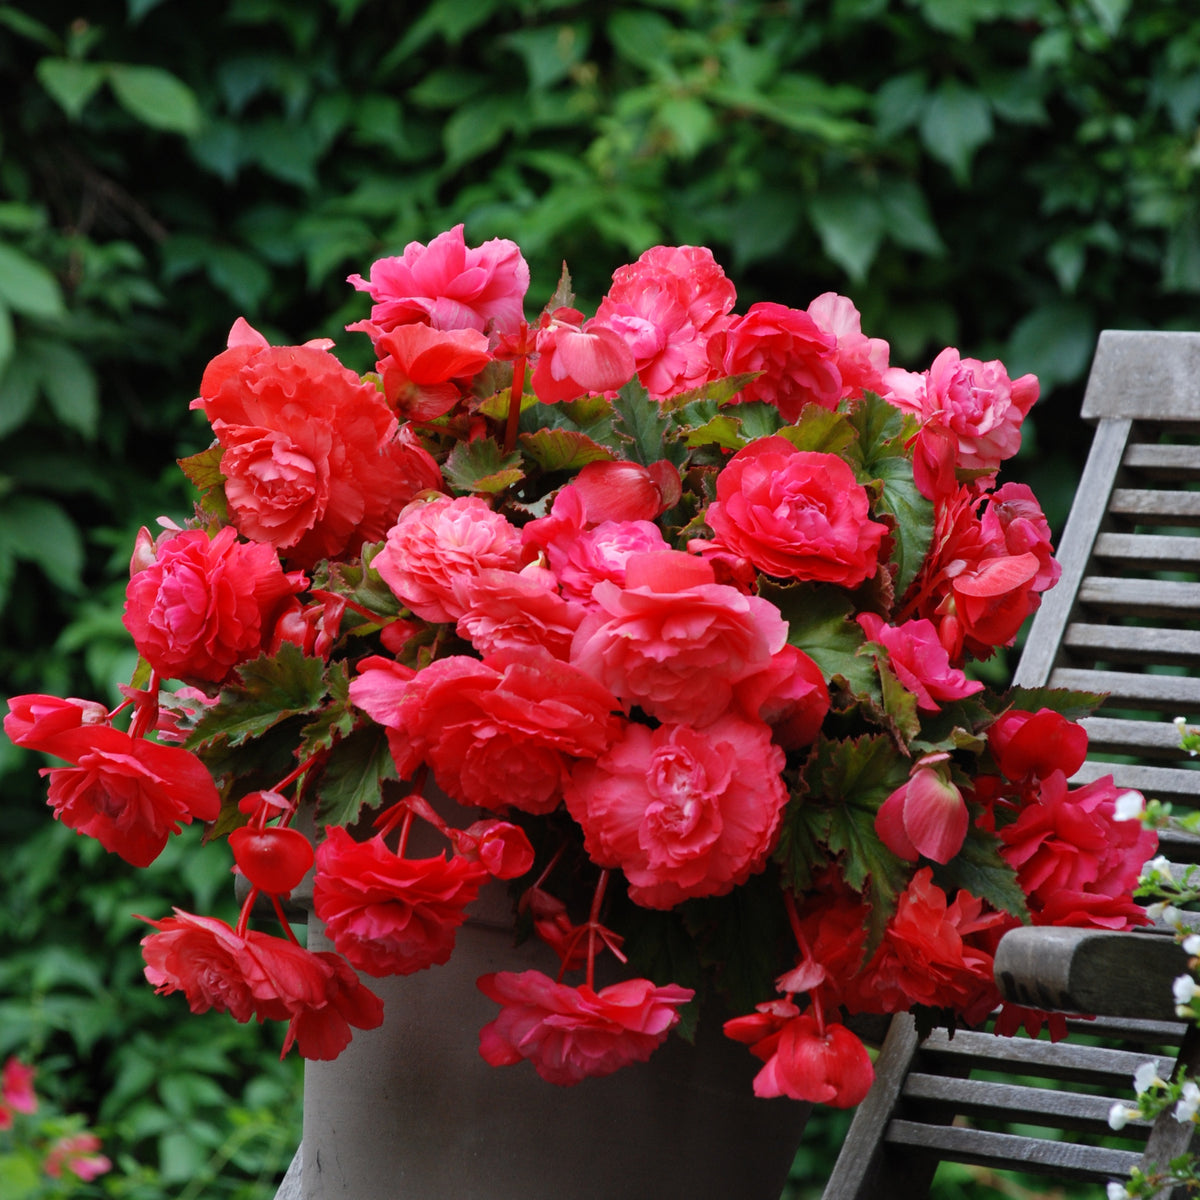 Bégonia retombant parfumé Pink delight - Begonia odorata pink delight - Bulbes à fleurs